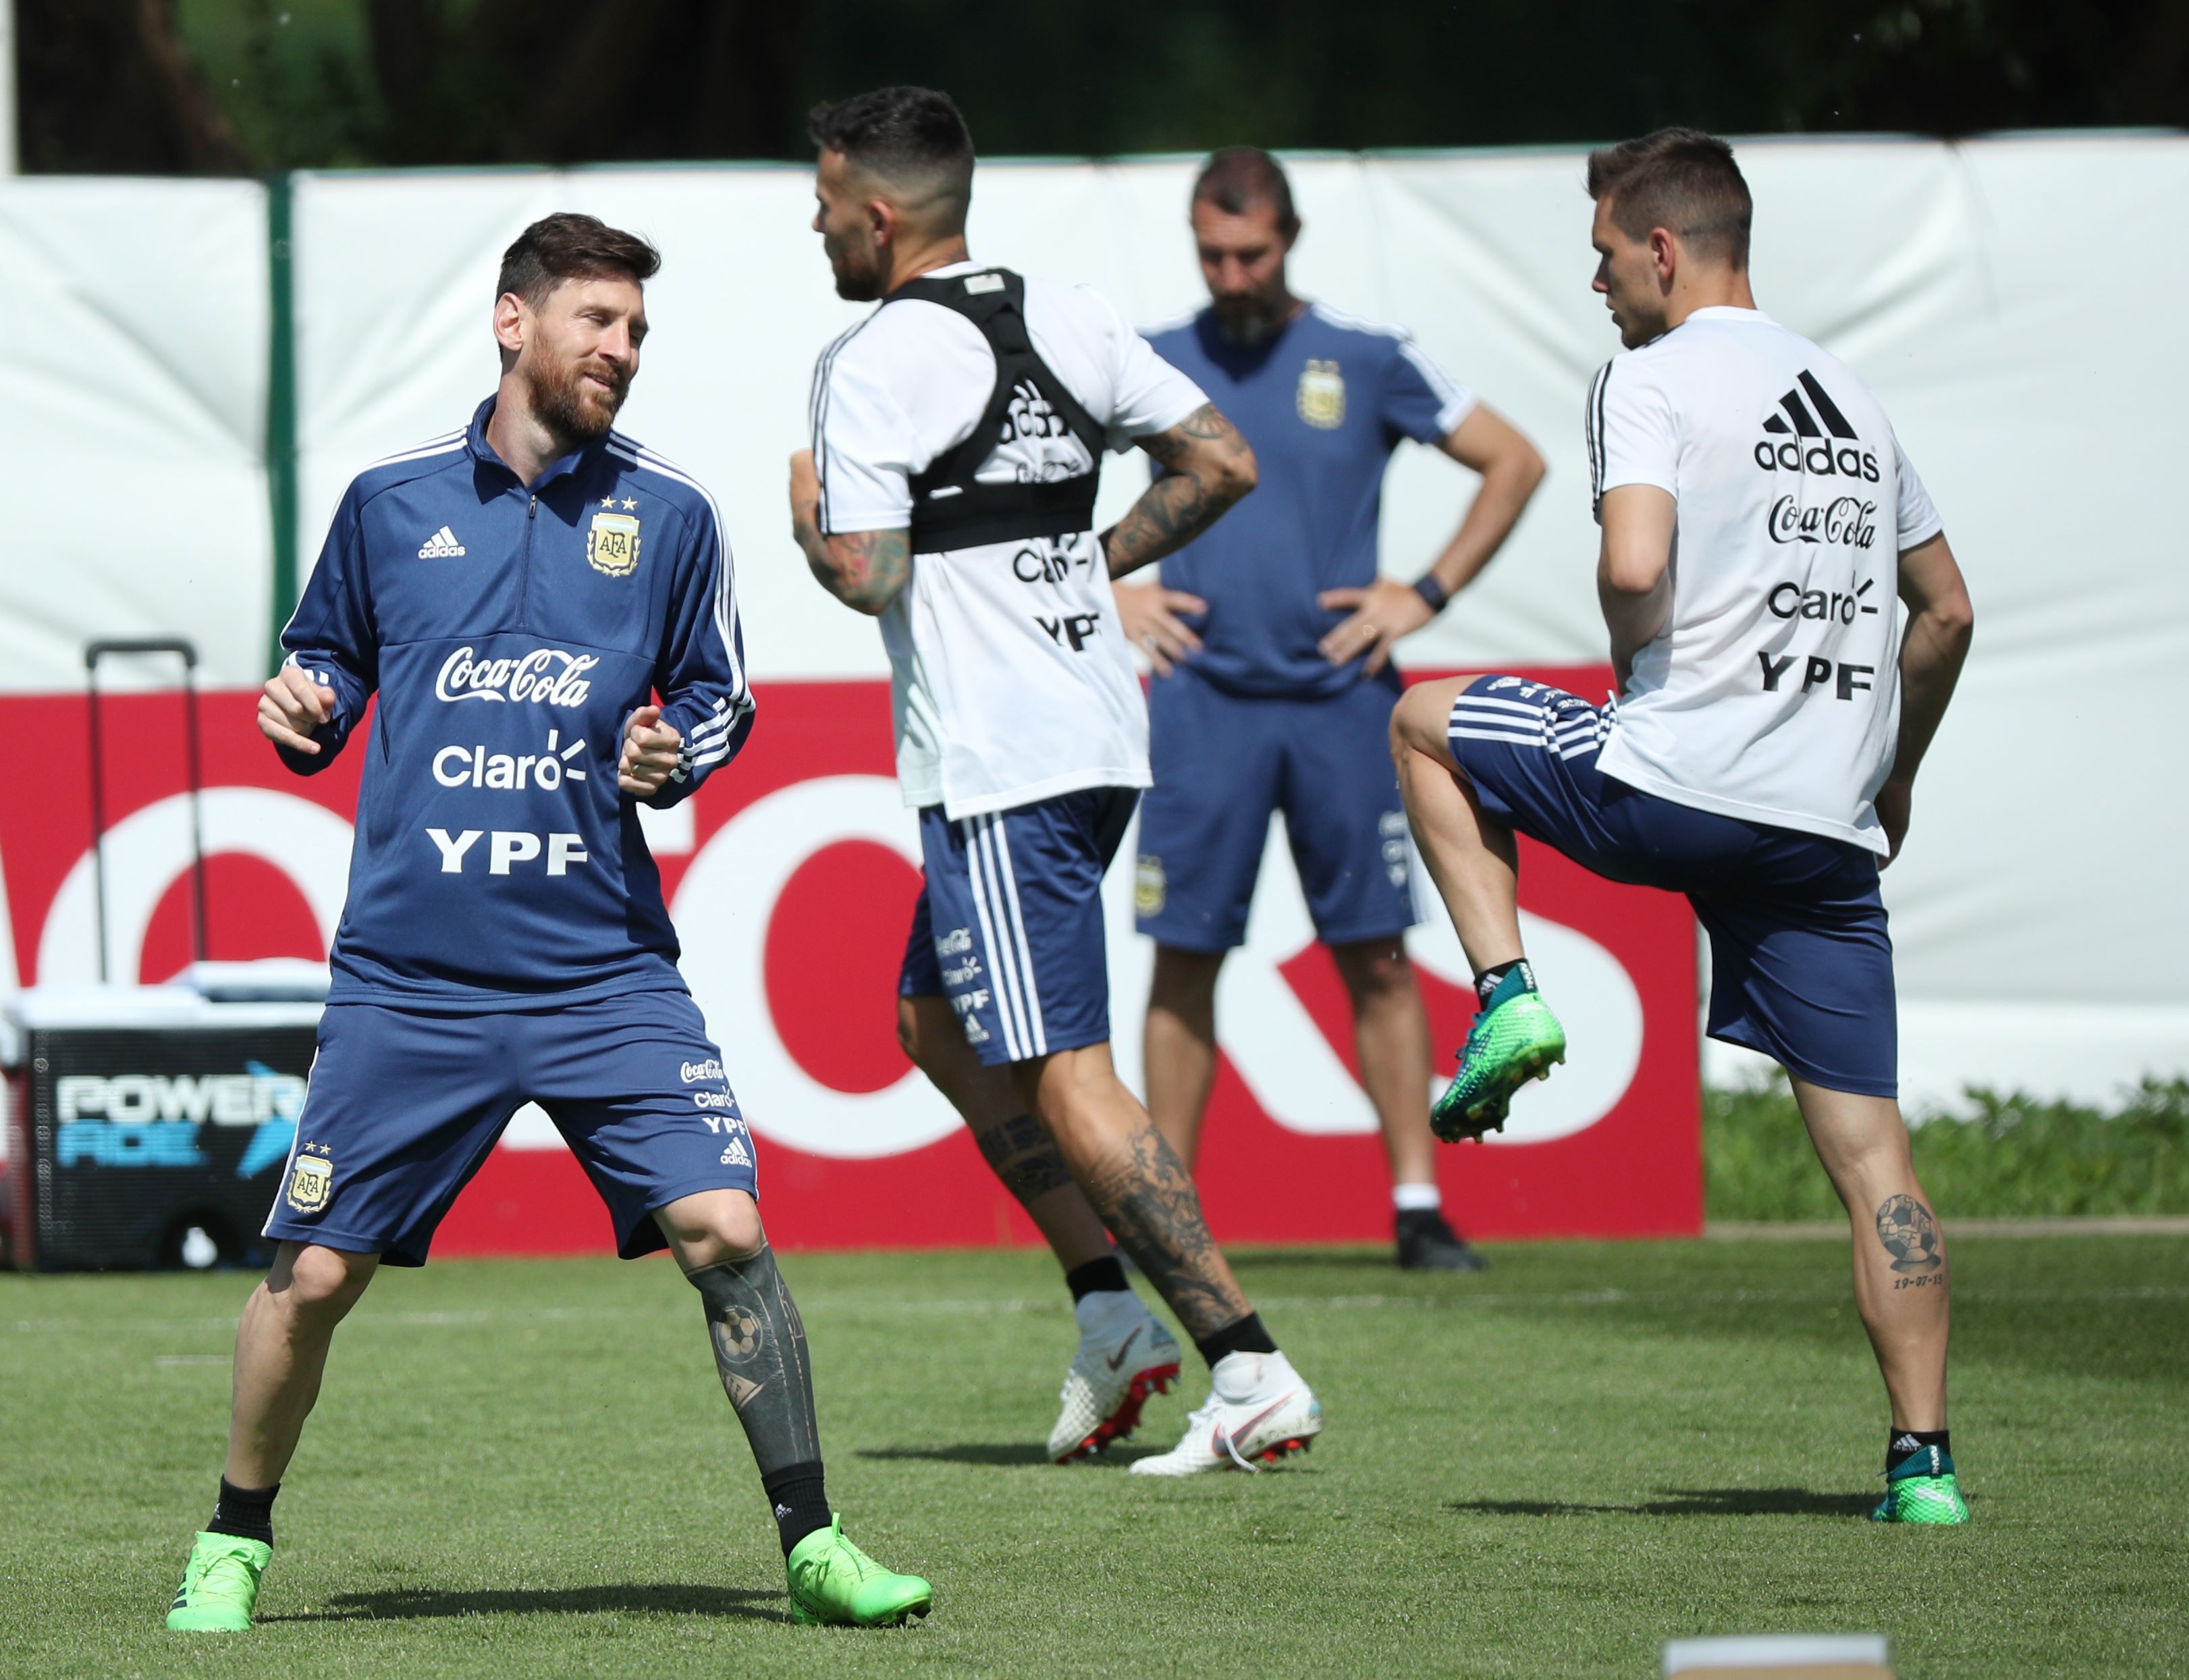 Football: 'Lay off Messi', says Argentina coach before Croatia clash